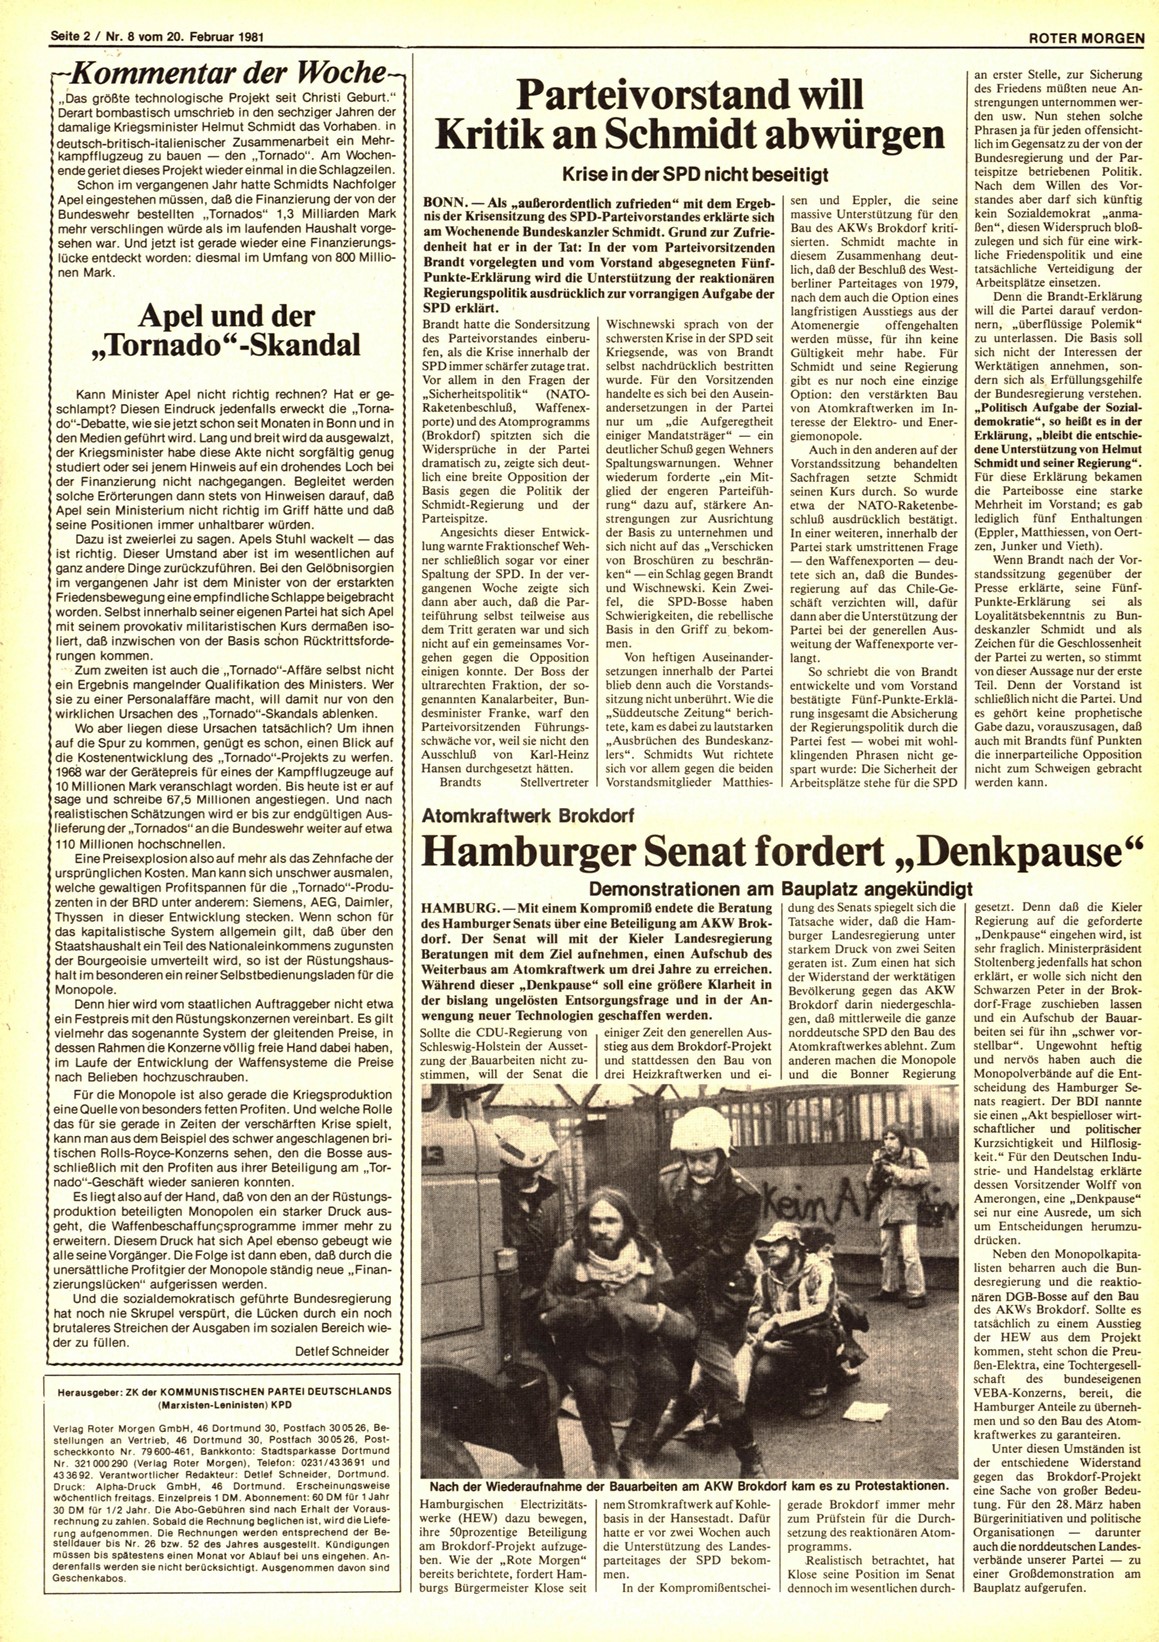 Roter Morgen, 15. Jg., 20. Februar 1981, Nr. 8, Seite 2